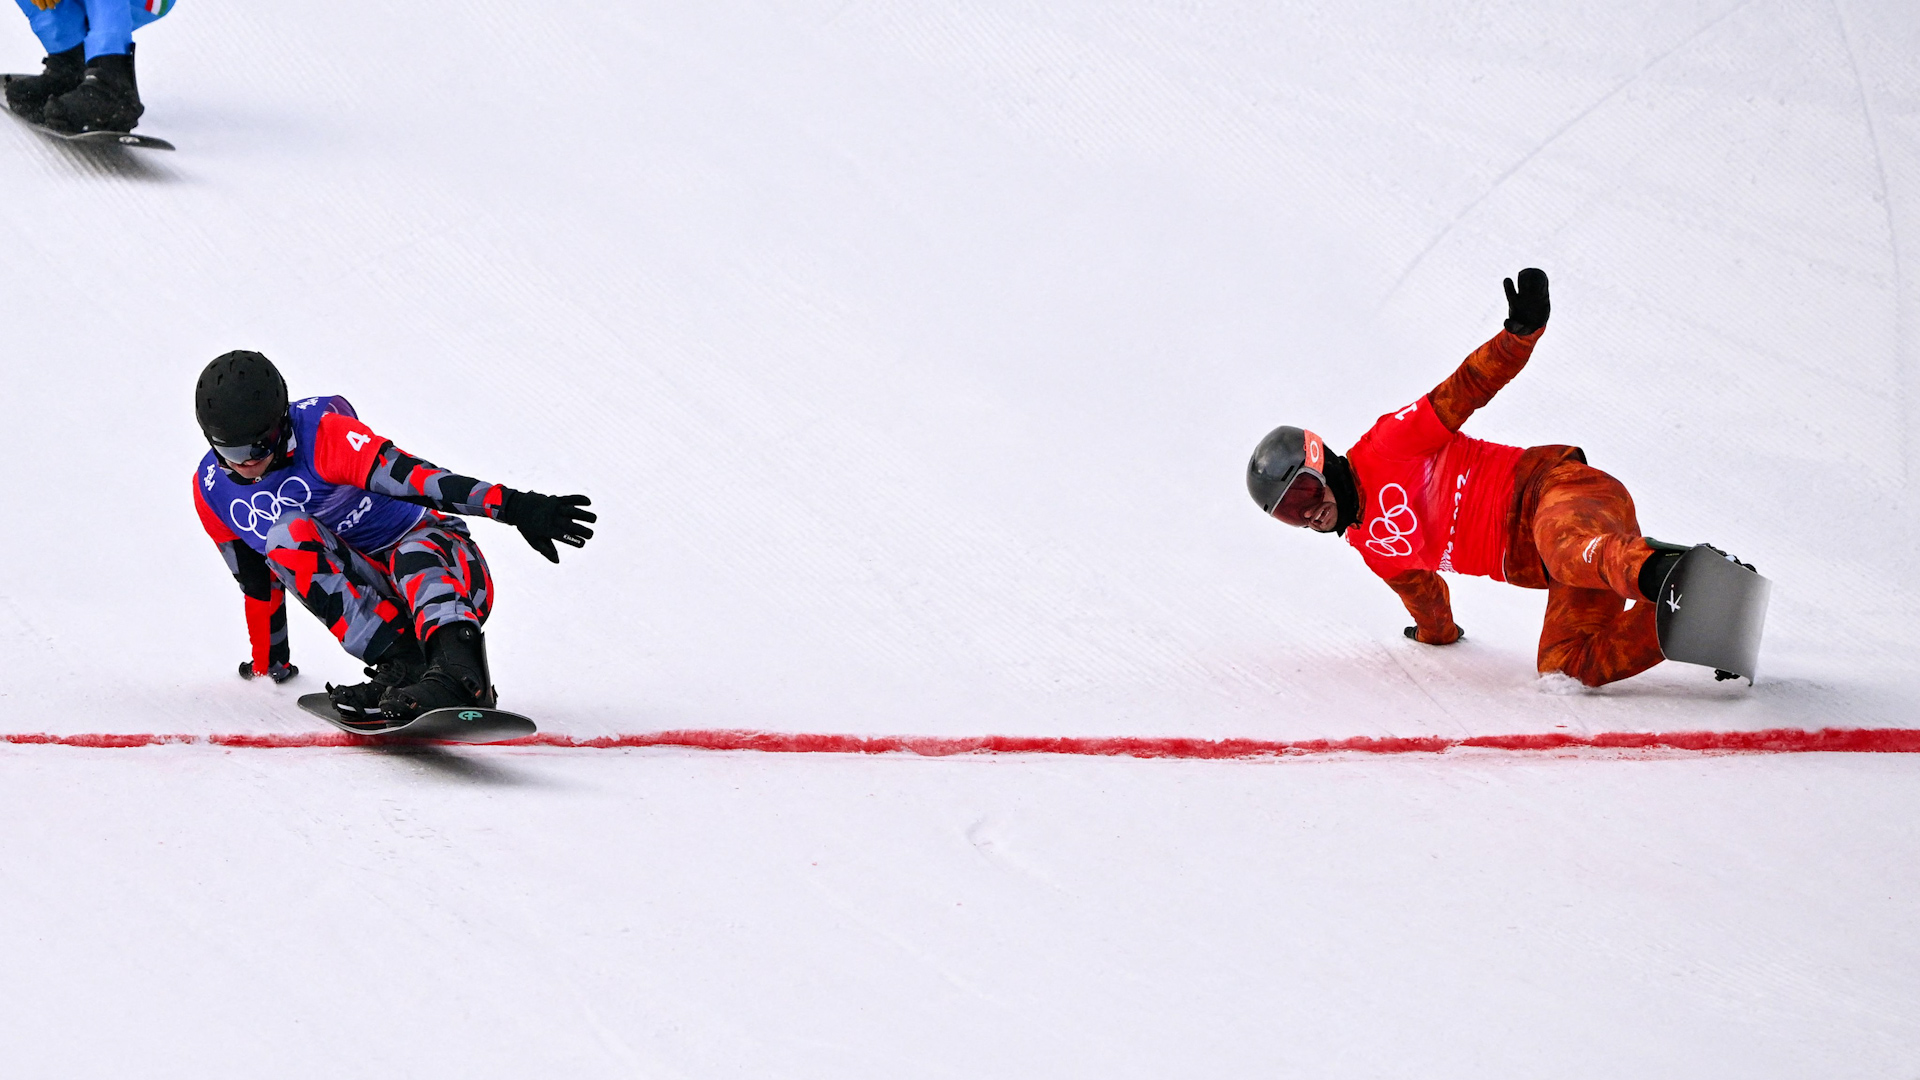 Austria Wins Gold in Mens Snowboard Cross in Photo Finish, USAs Jake Vedder 6th